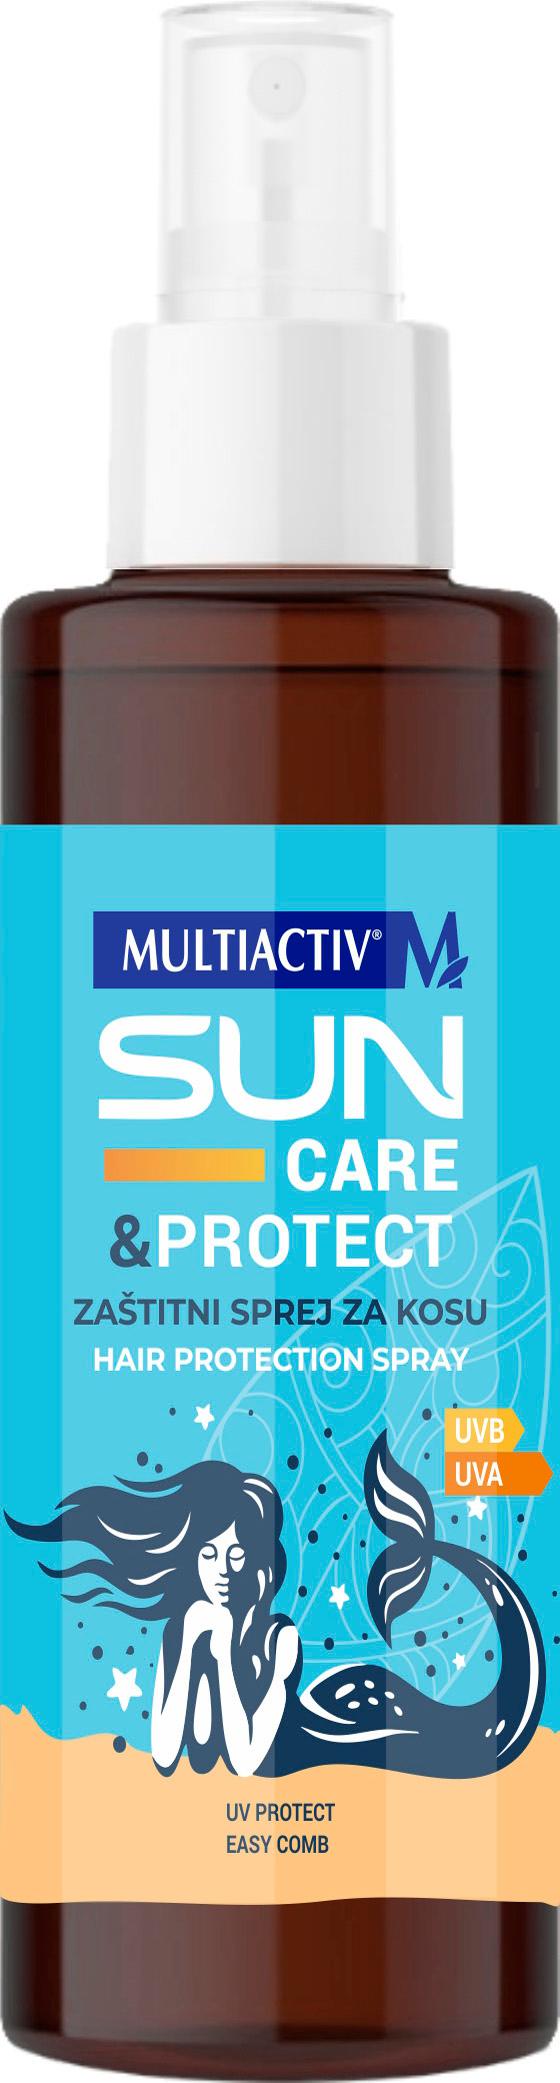 Selected image for MULTIACTIV Zaštitni sprej za kosu Sun Care&Protect 100ml